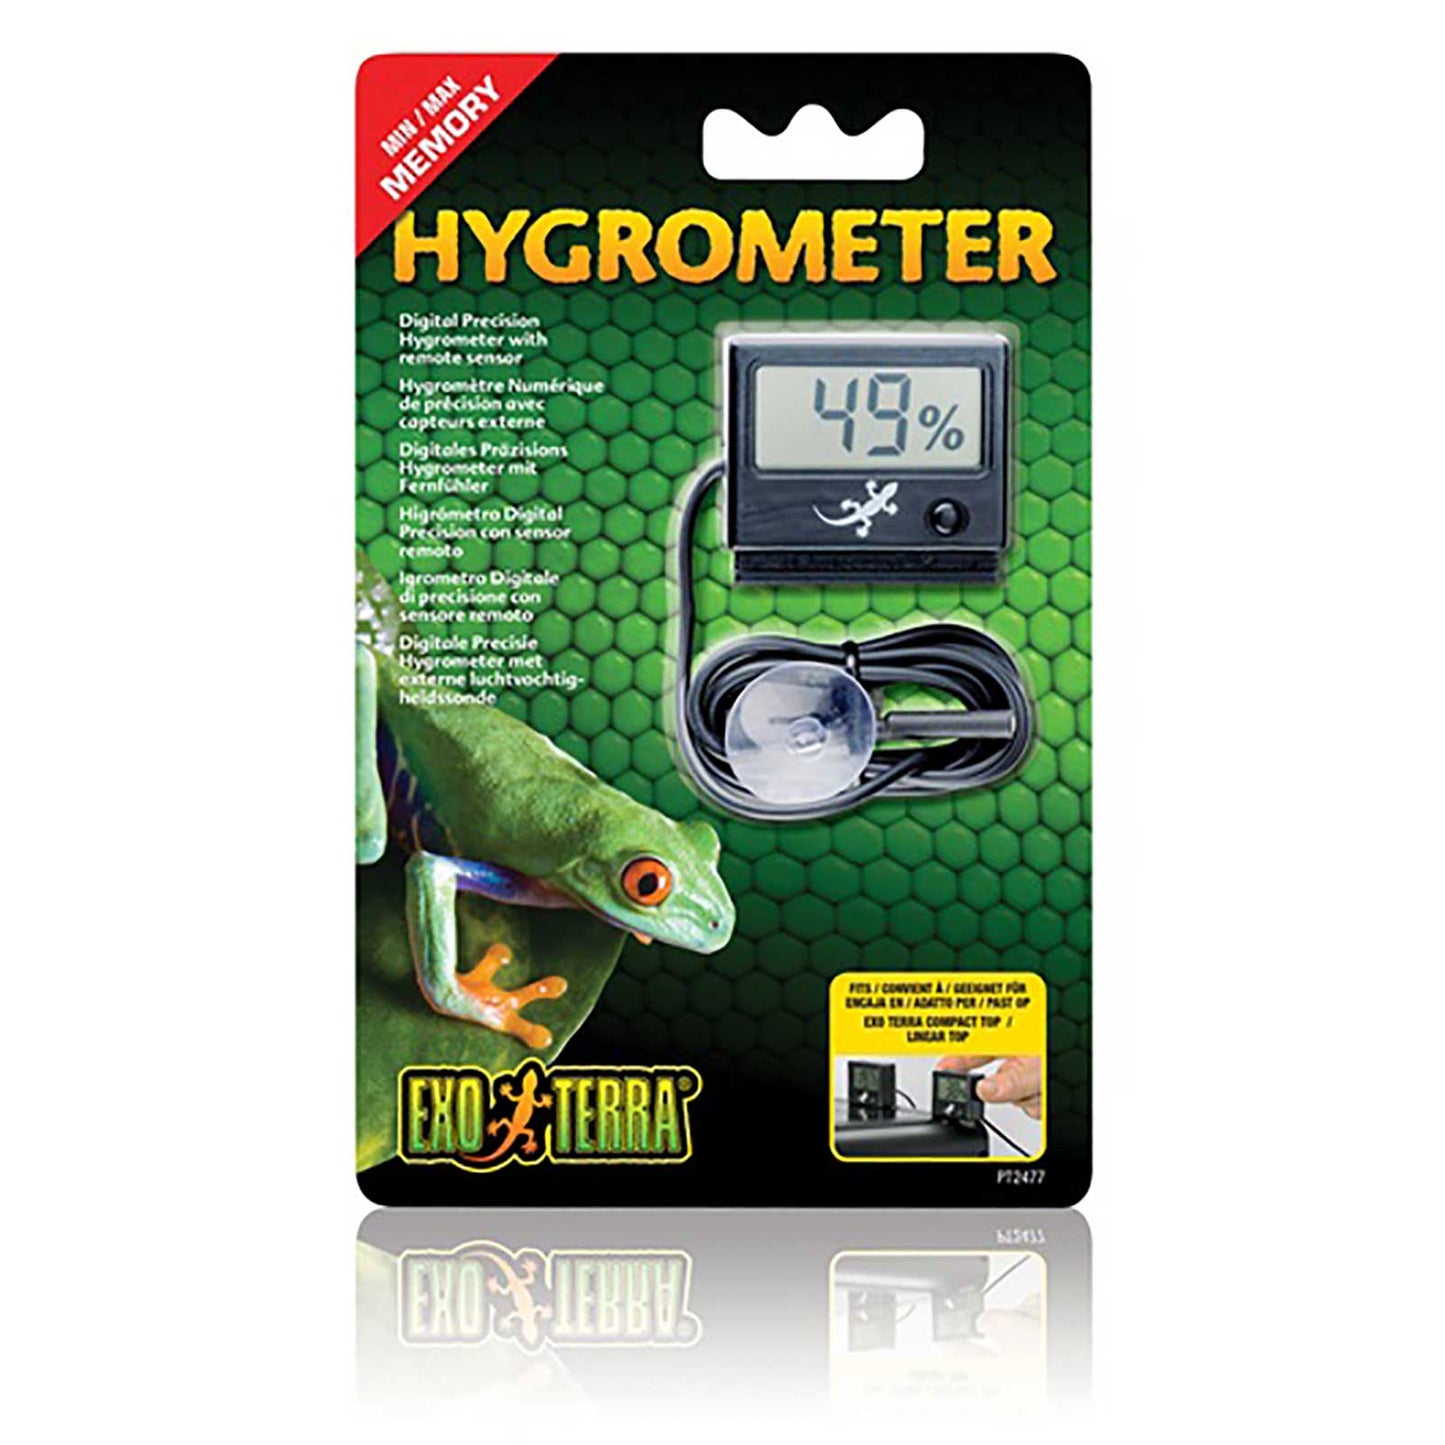 Exo Terra Digital Hygrometer